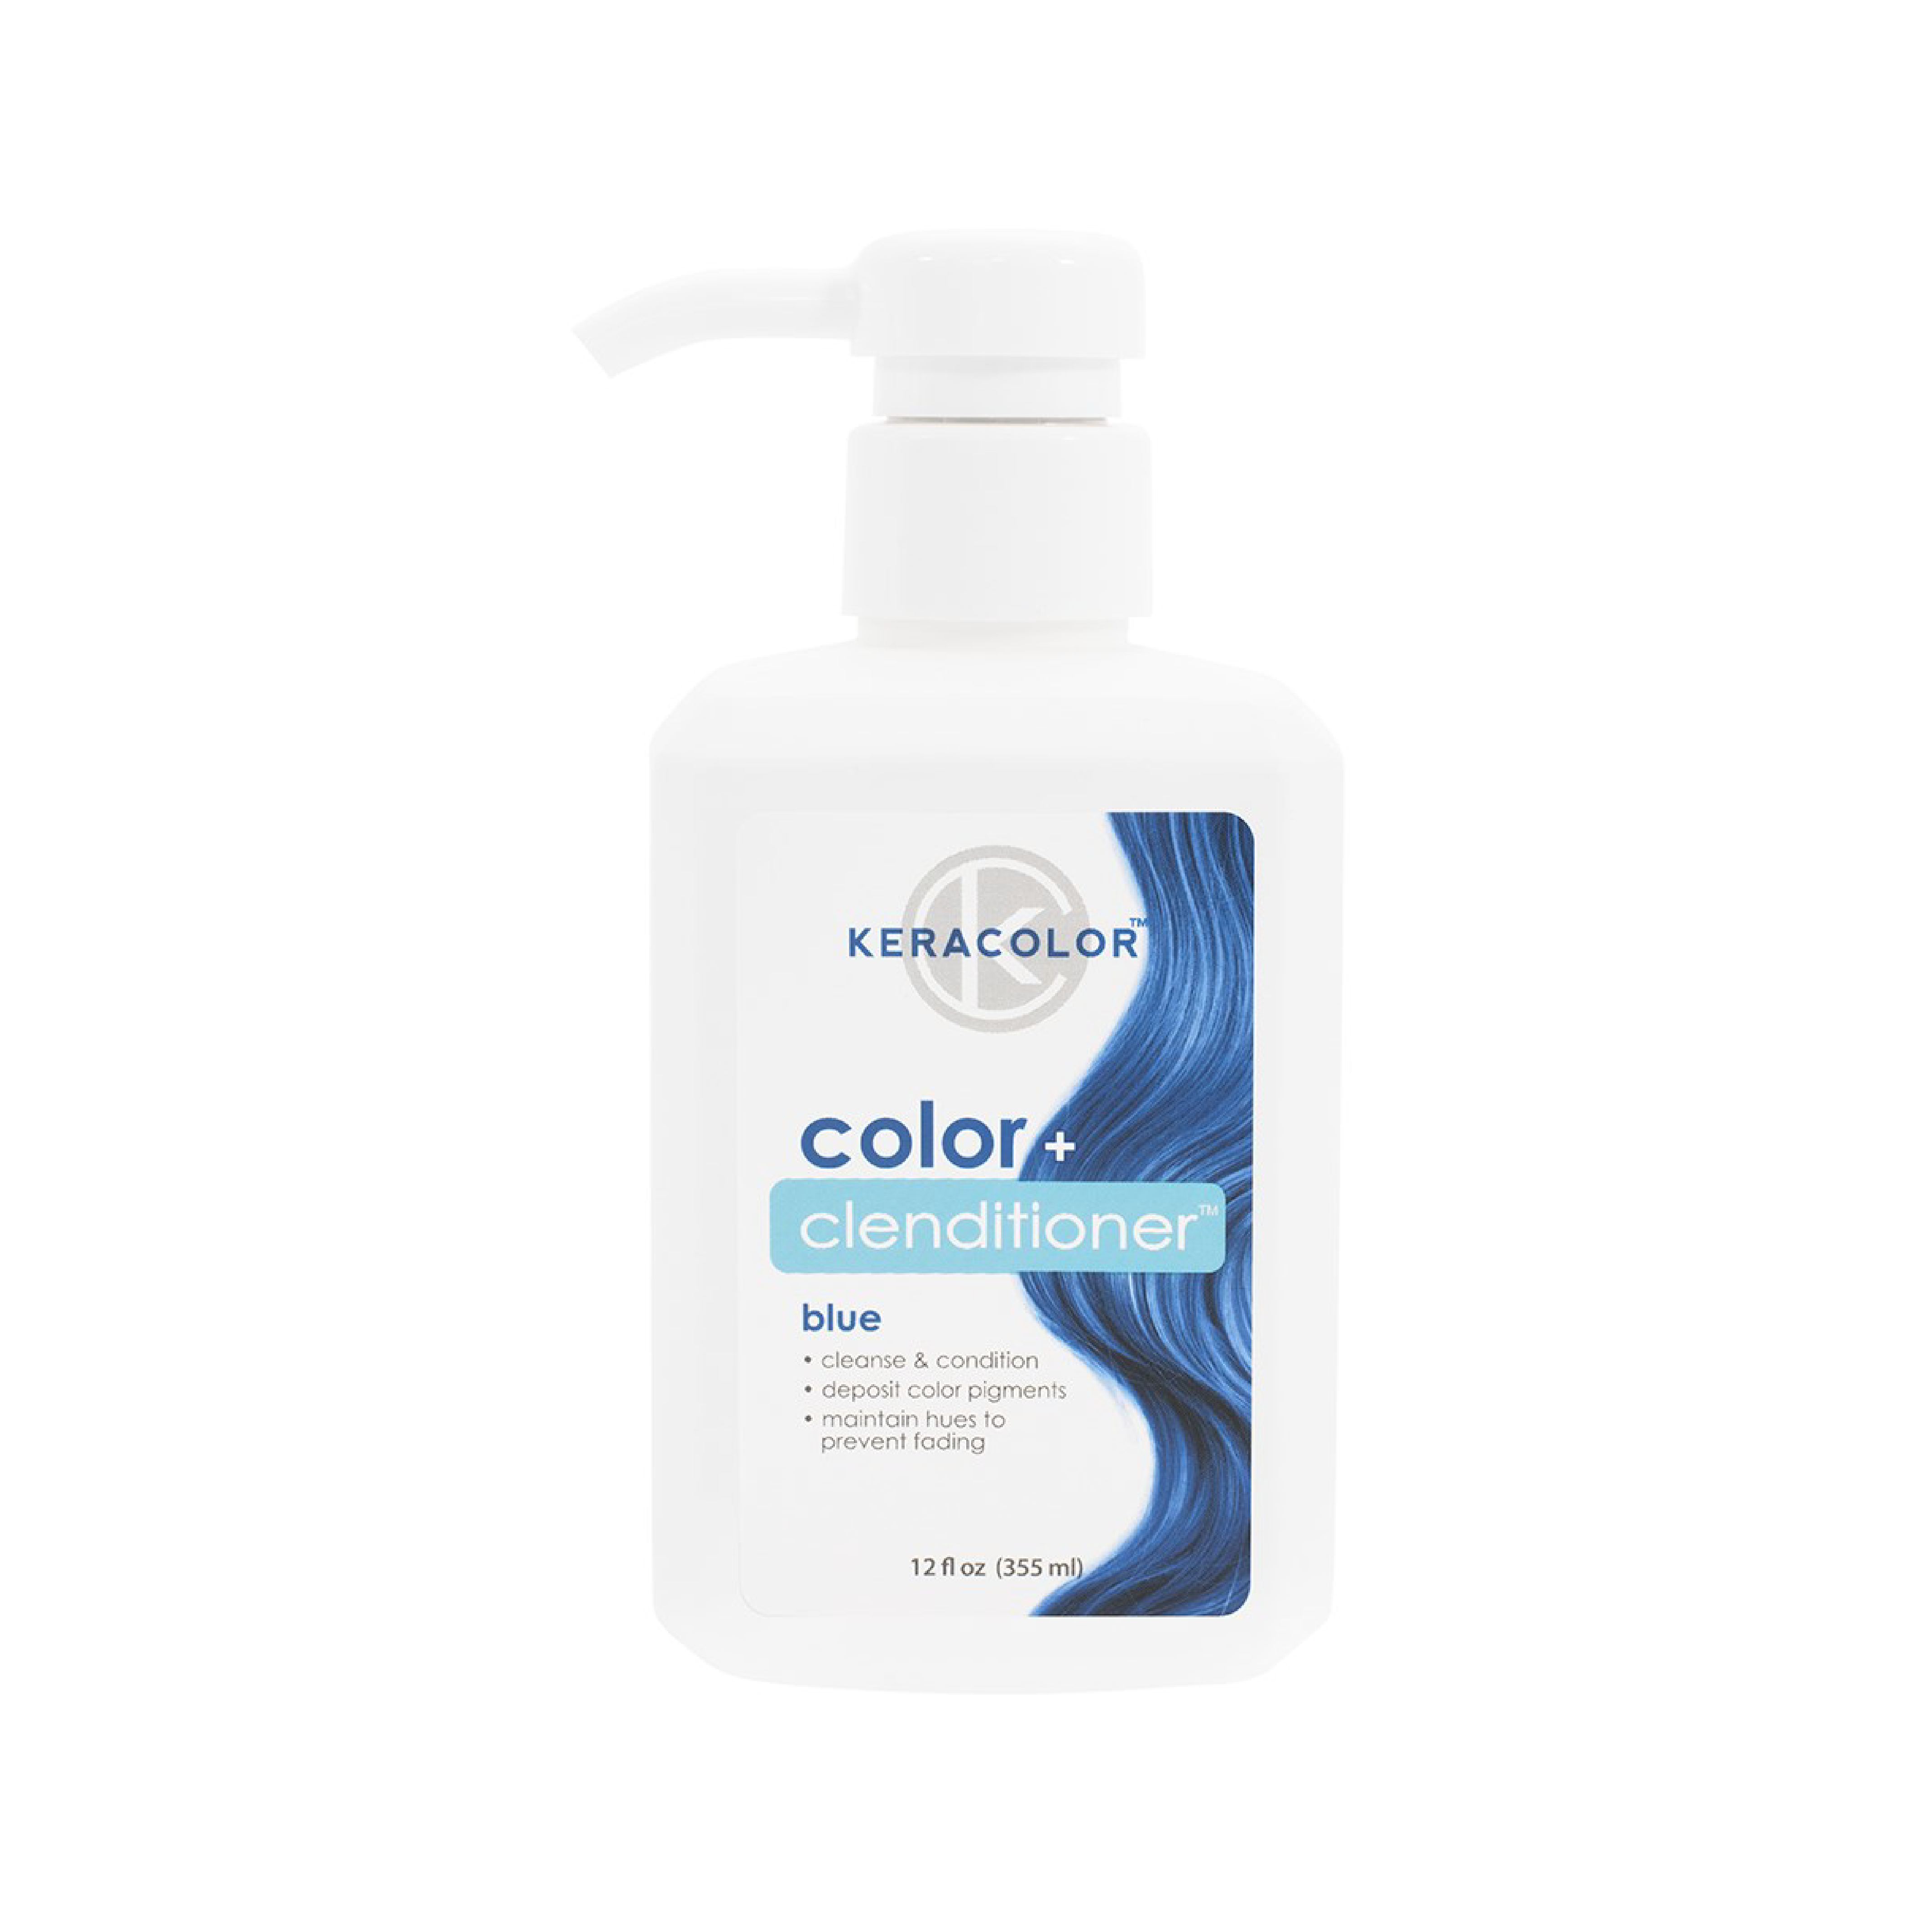 Keracolor Color Clenditioner Blue Colouring Shampoo - 355ml